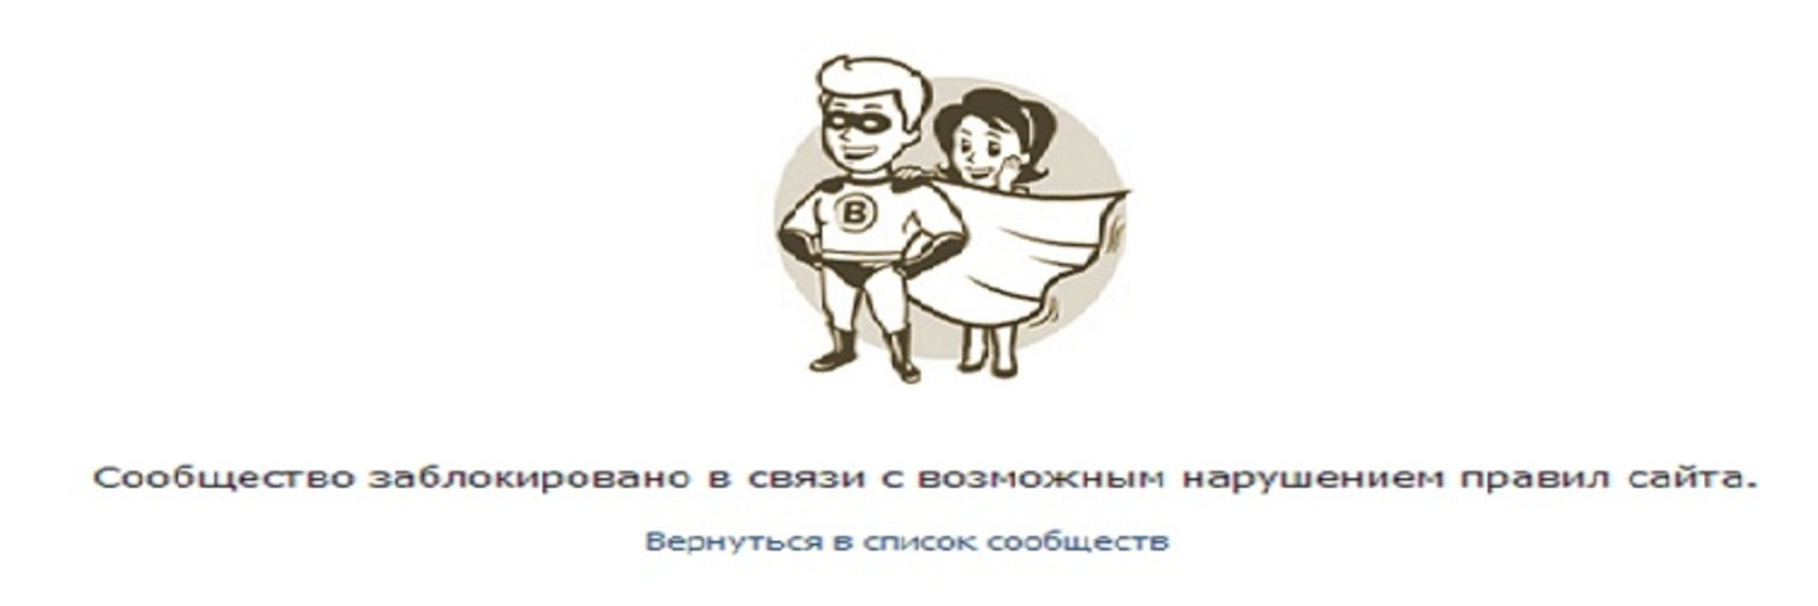 Cab mdx39 ru pa web